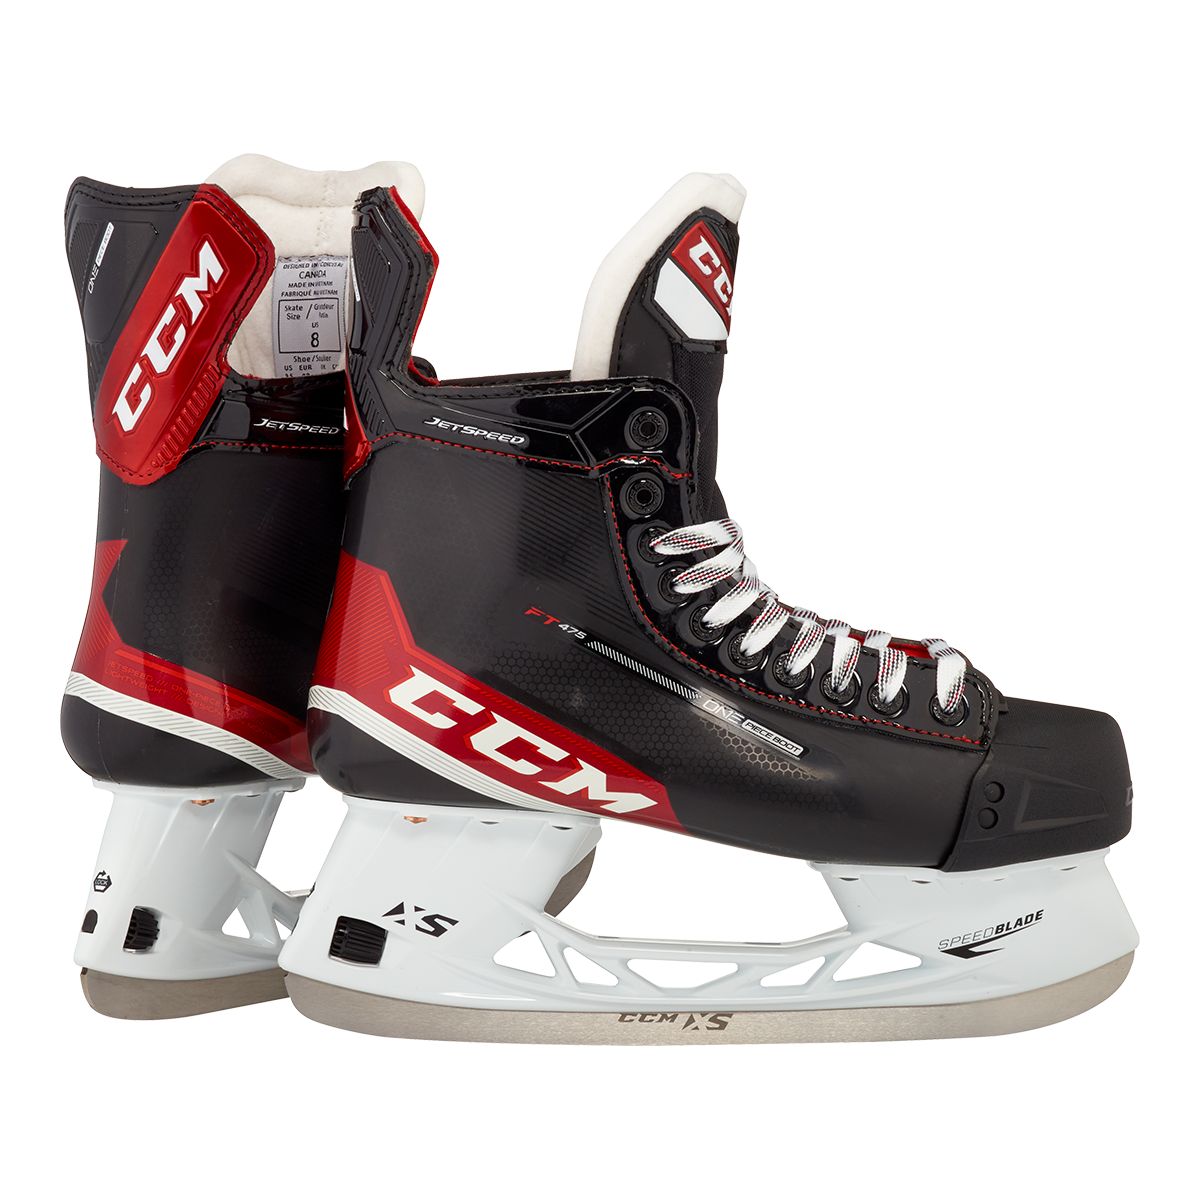 Image of CCM Jetspeed Ft475 Intermediate Hockey Skates